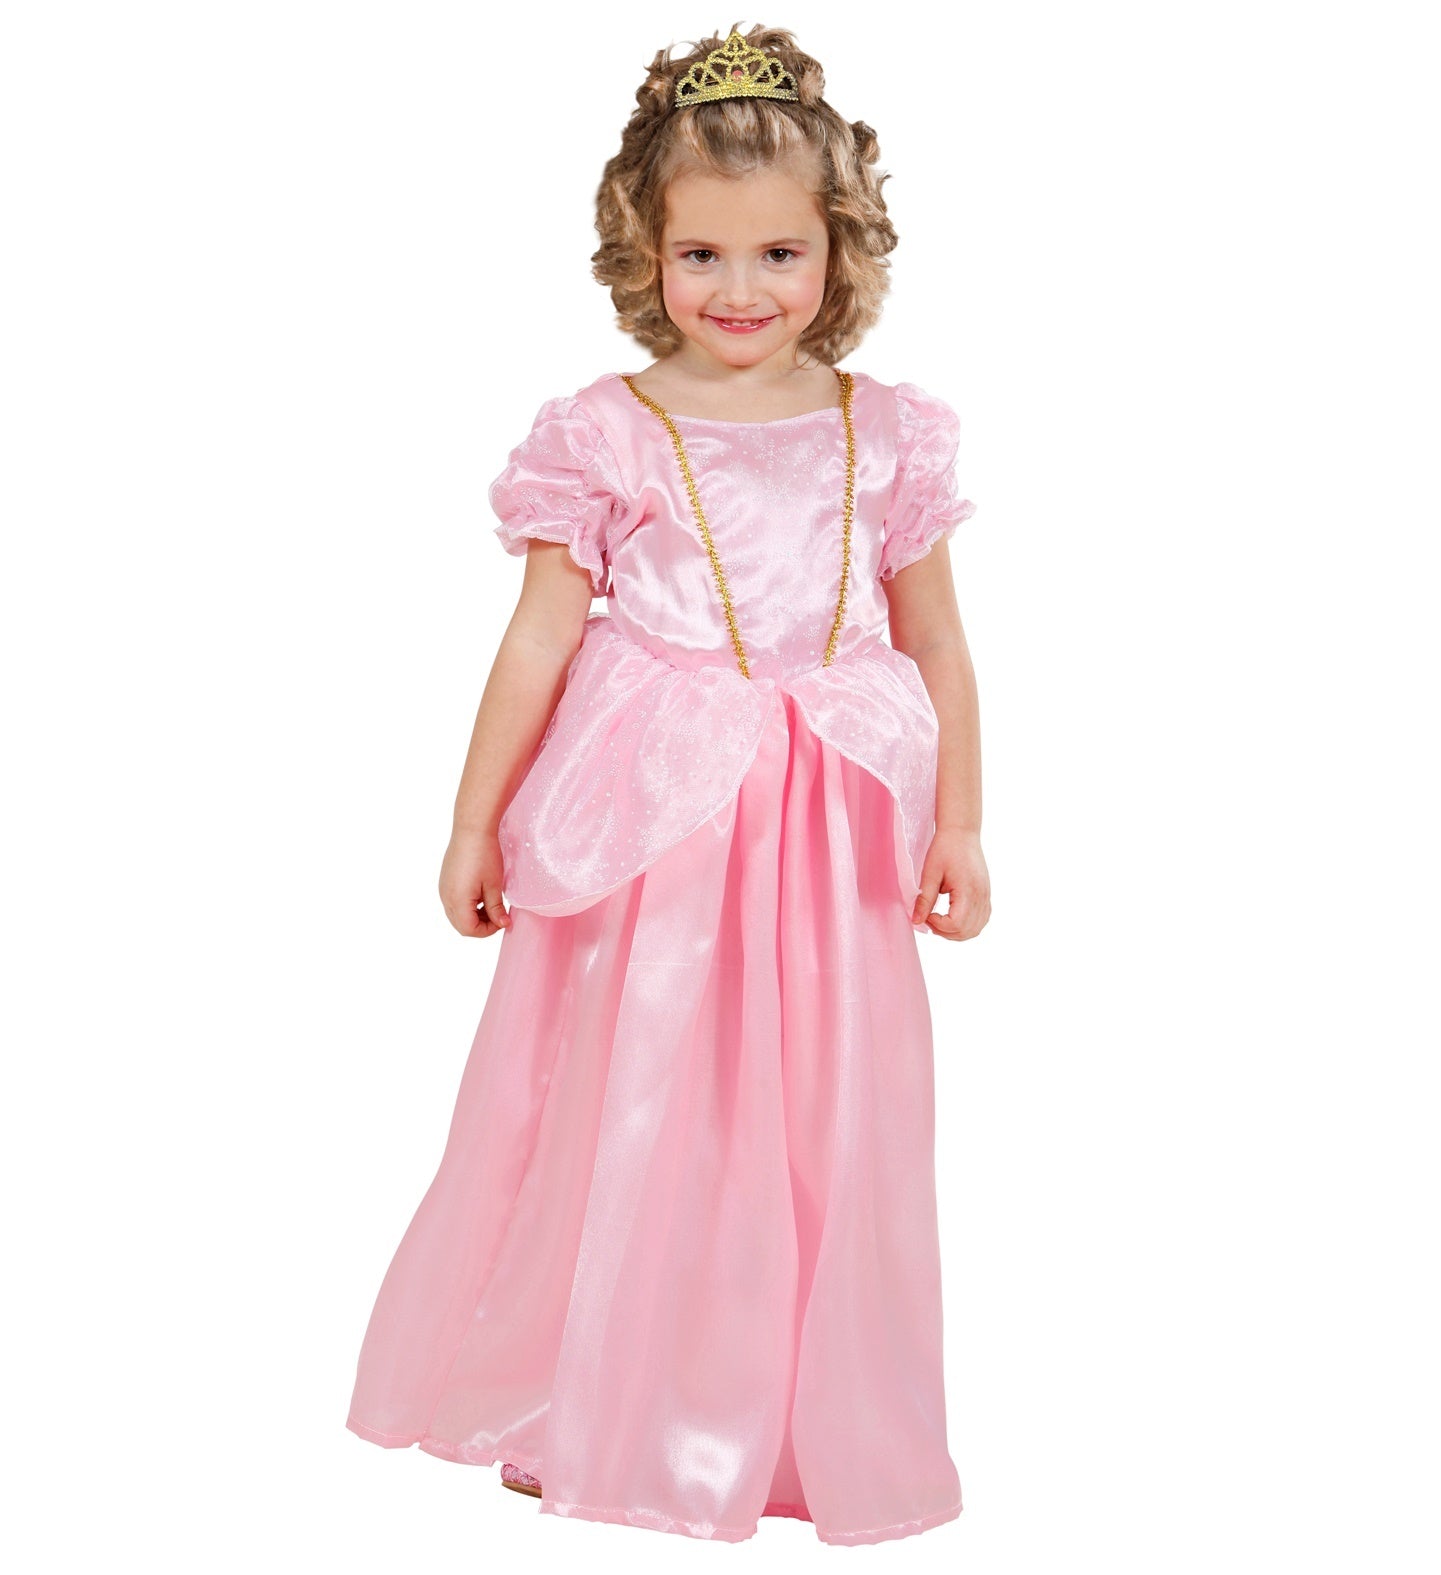 Widmann - Koning Prins & Adel Kostuum - Beatrix Carmen Victoria Prinses - Meisje - roze - Maat 104 - Carnavalskleding - Verkleedkleding